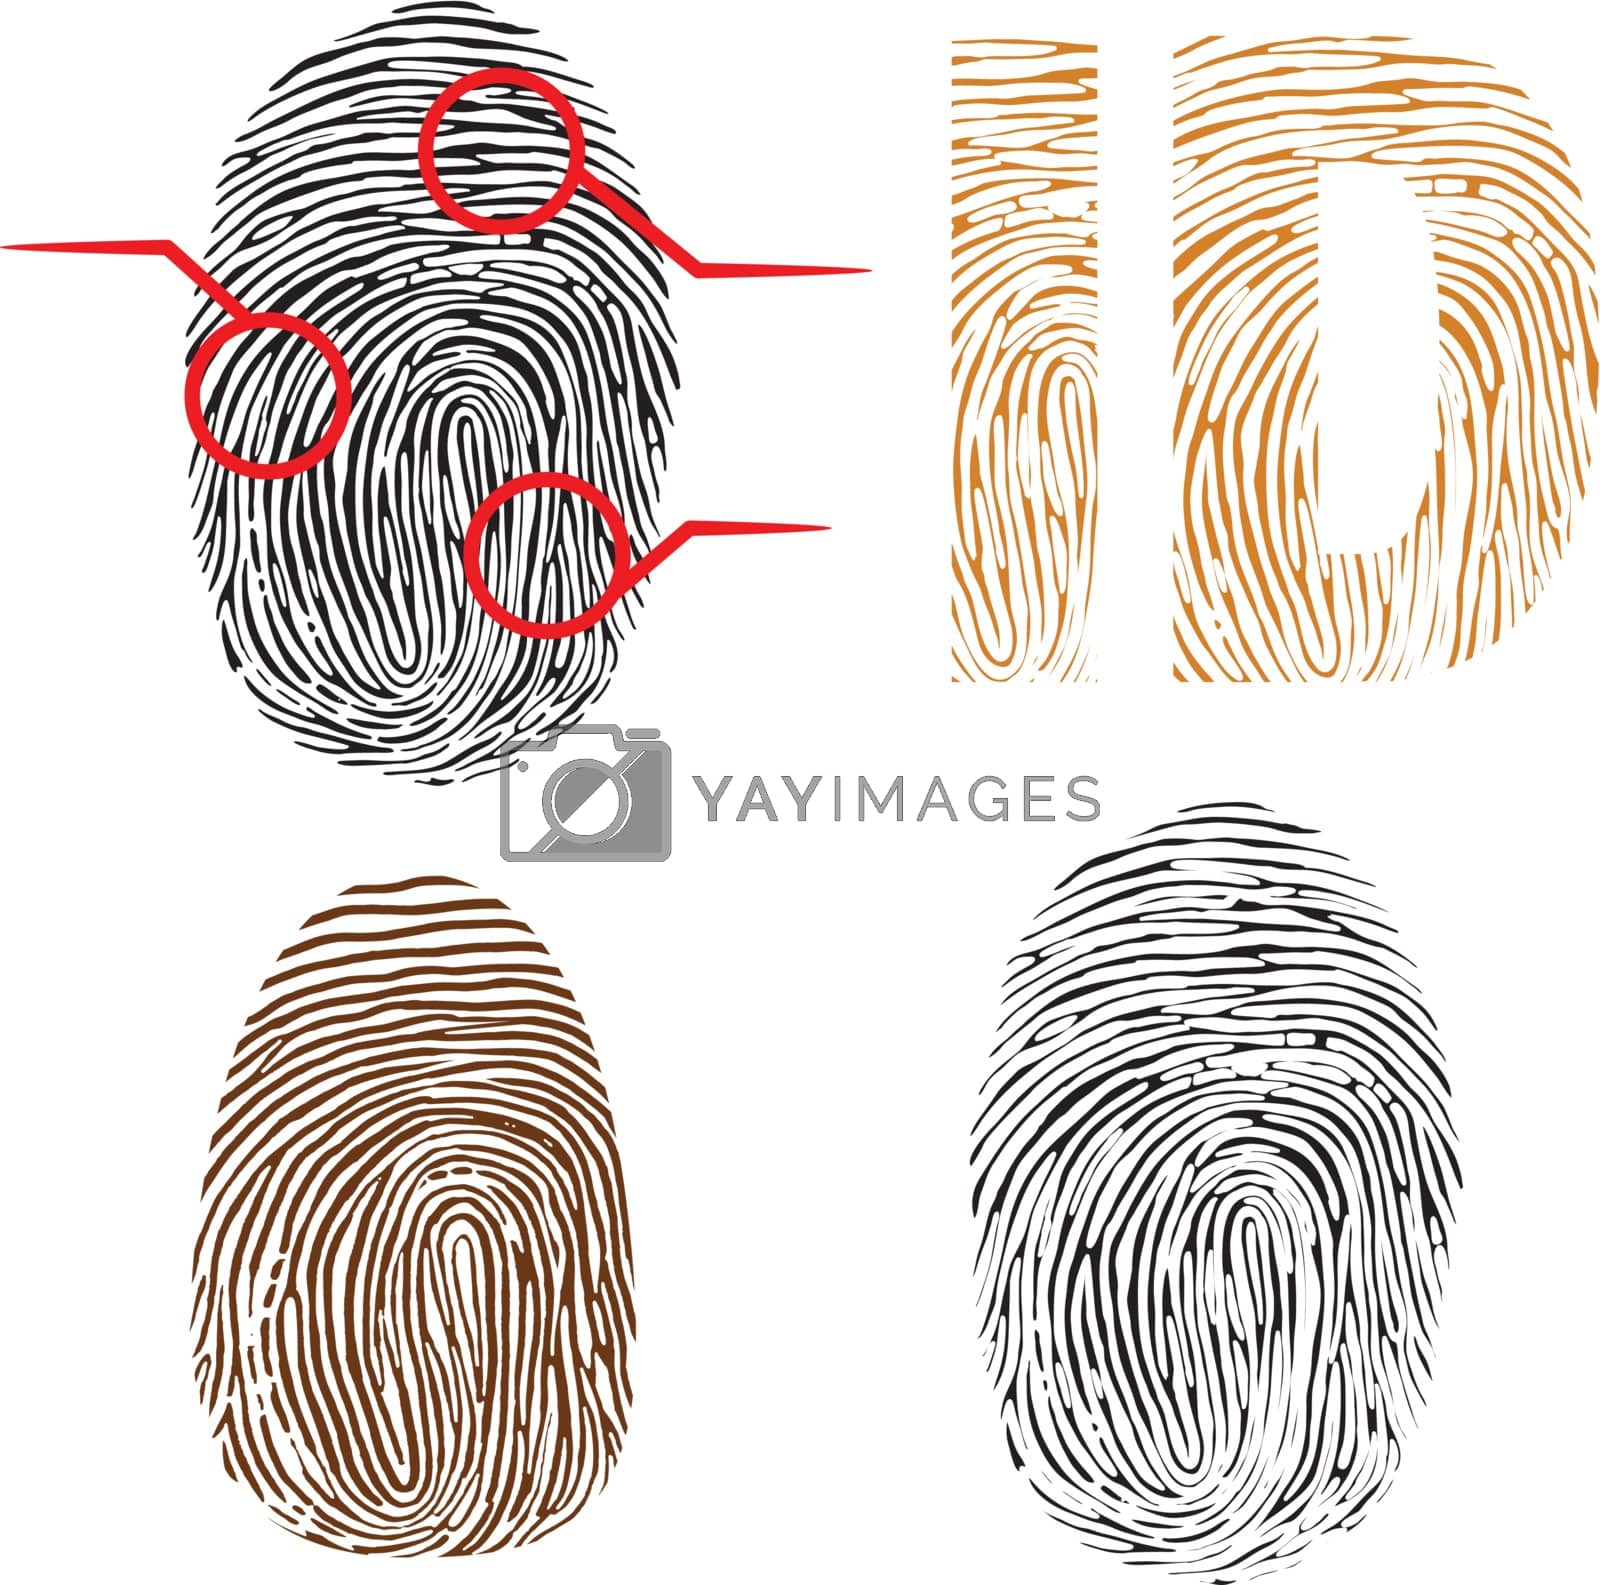 Royalty free image of Fingerprints by Portokalis